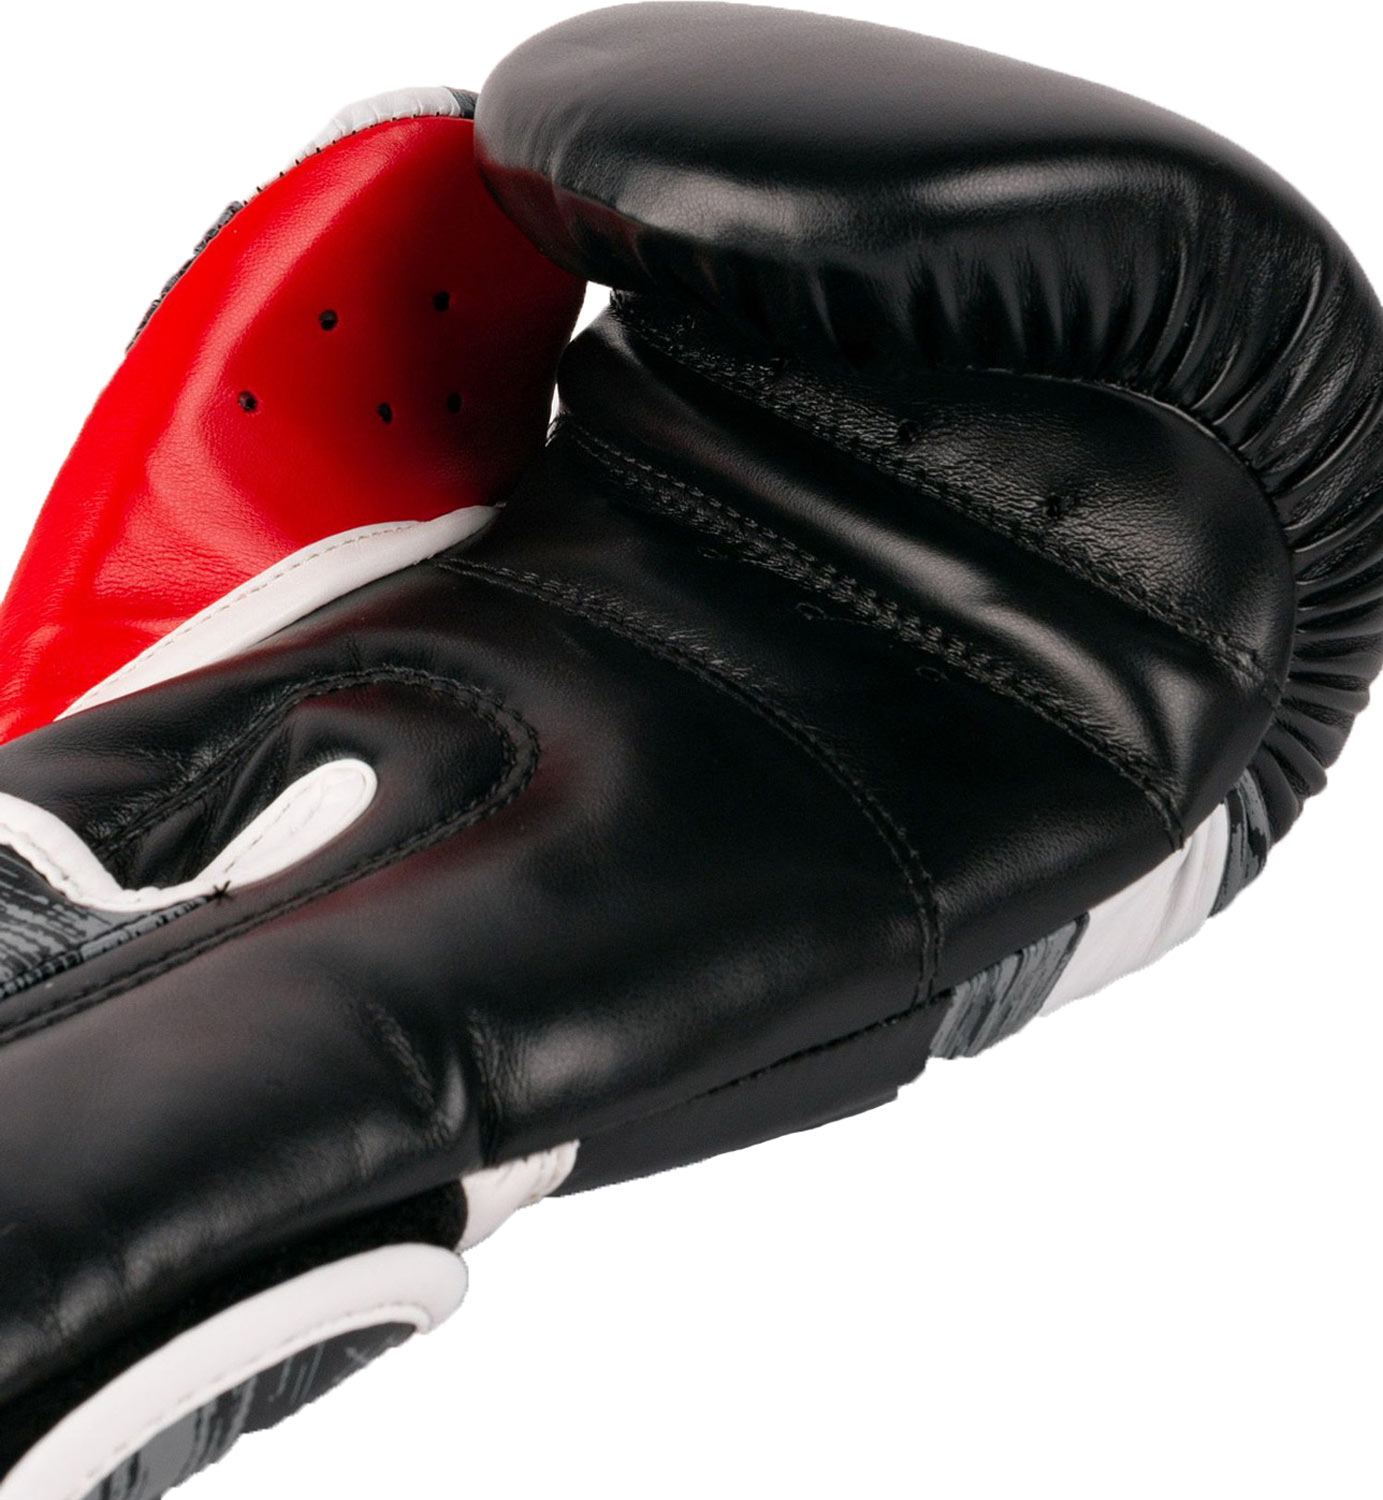 Kids' boxing gloves